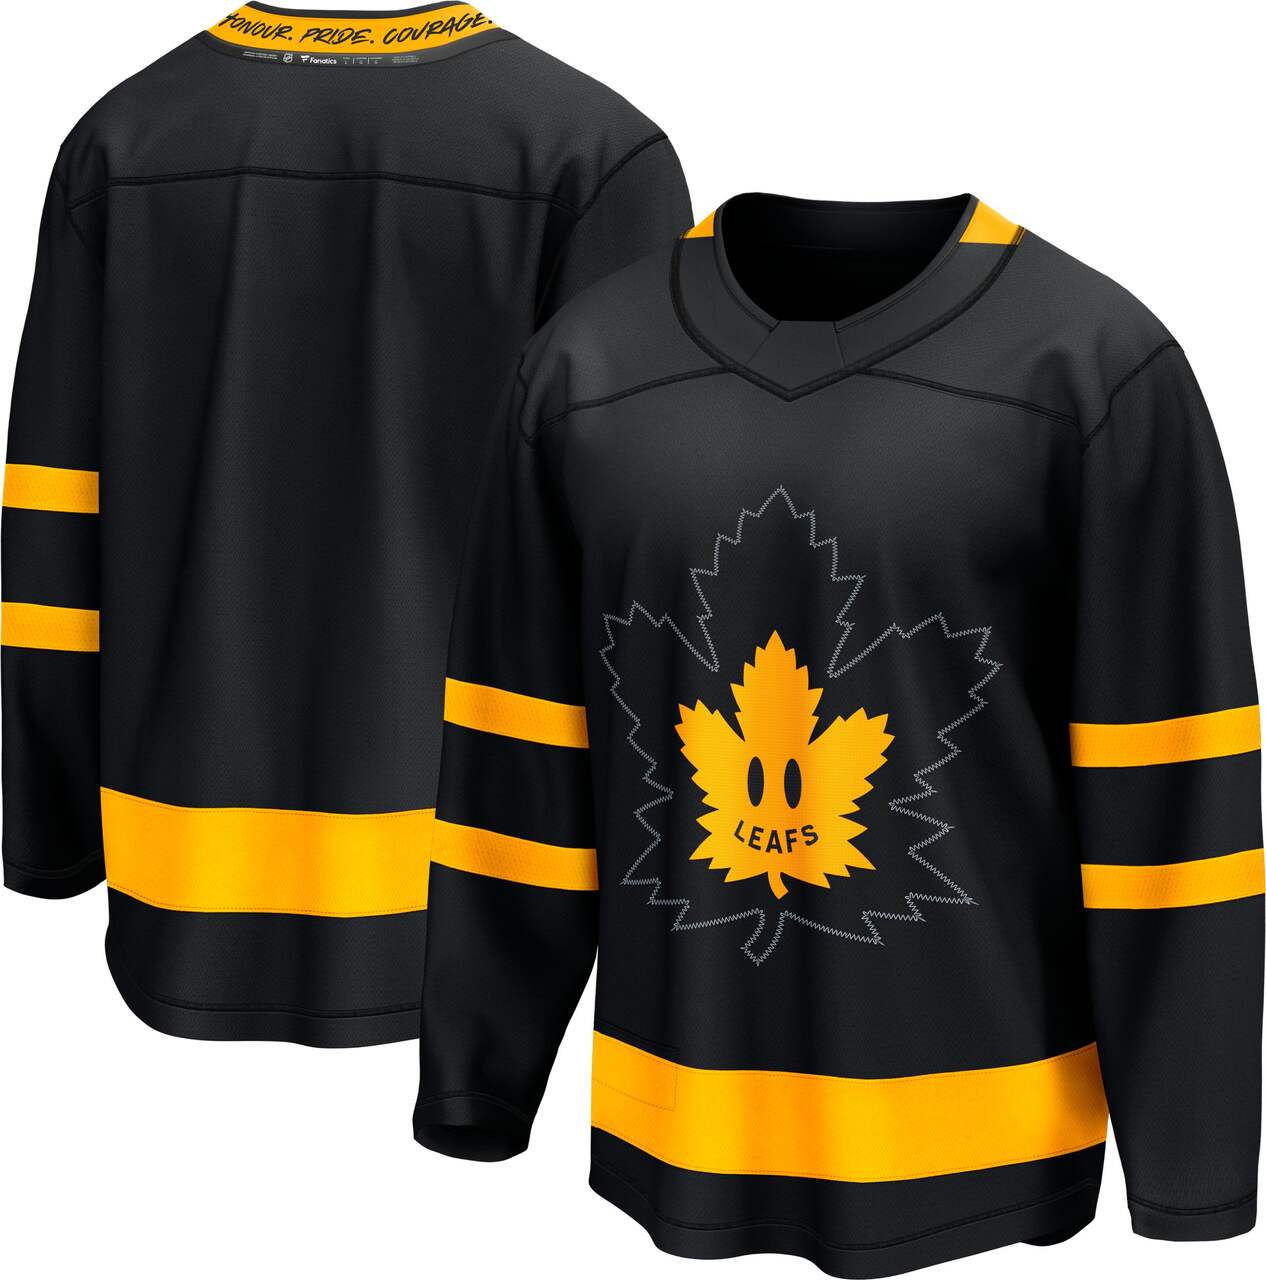 Justin Bieber Designs Alternate Jerseys for the Toronto Maple